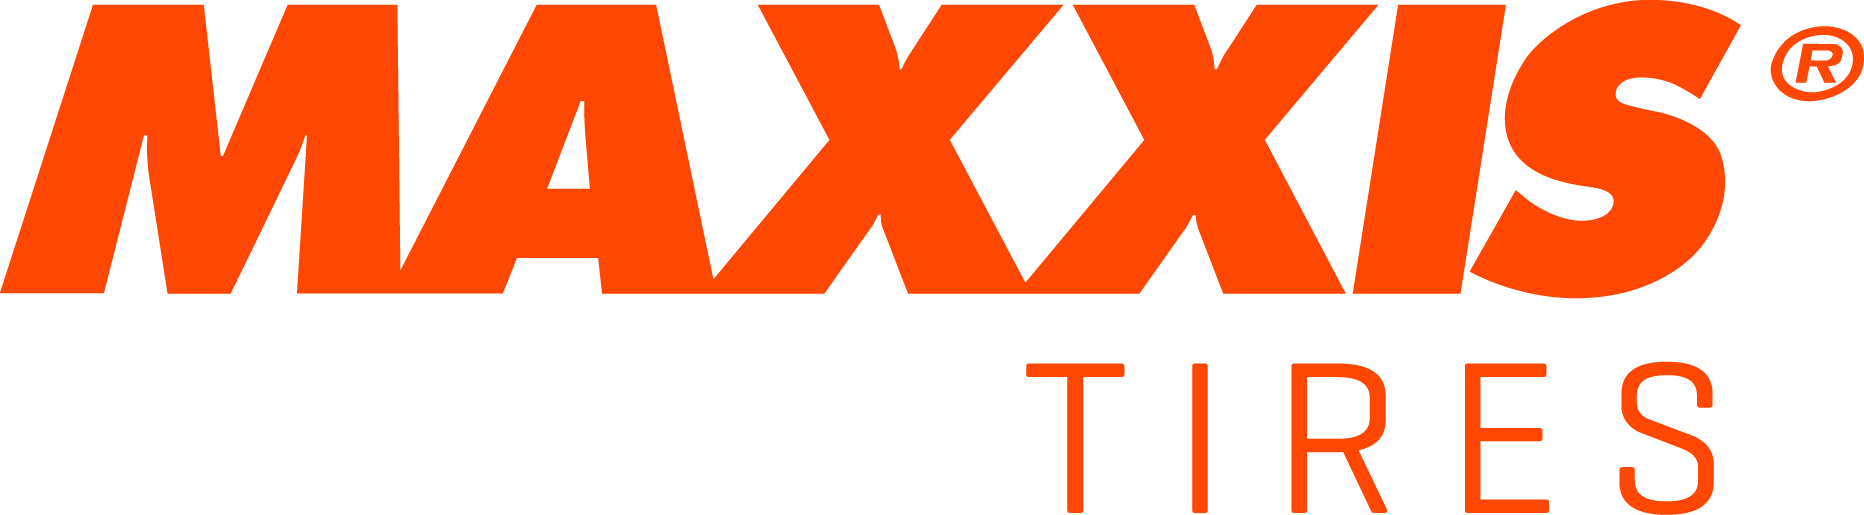 Maxxis Logo - Logos | Maxxis Tires USA